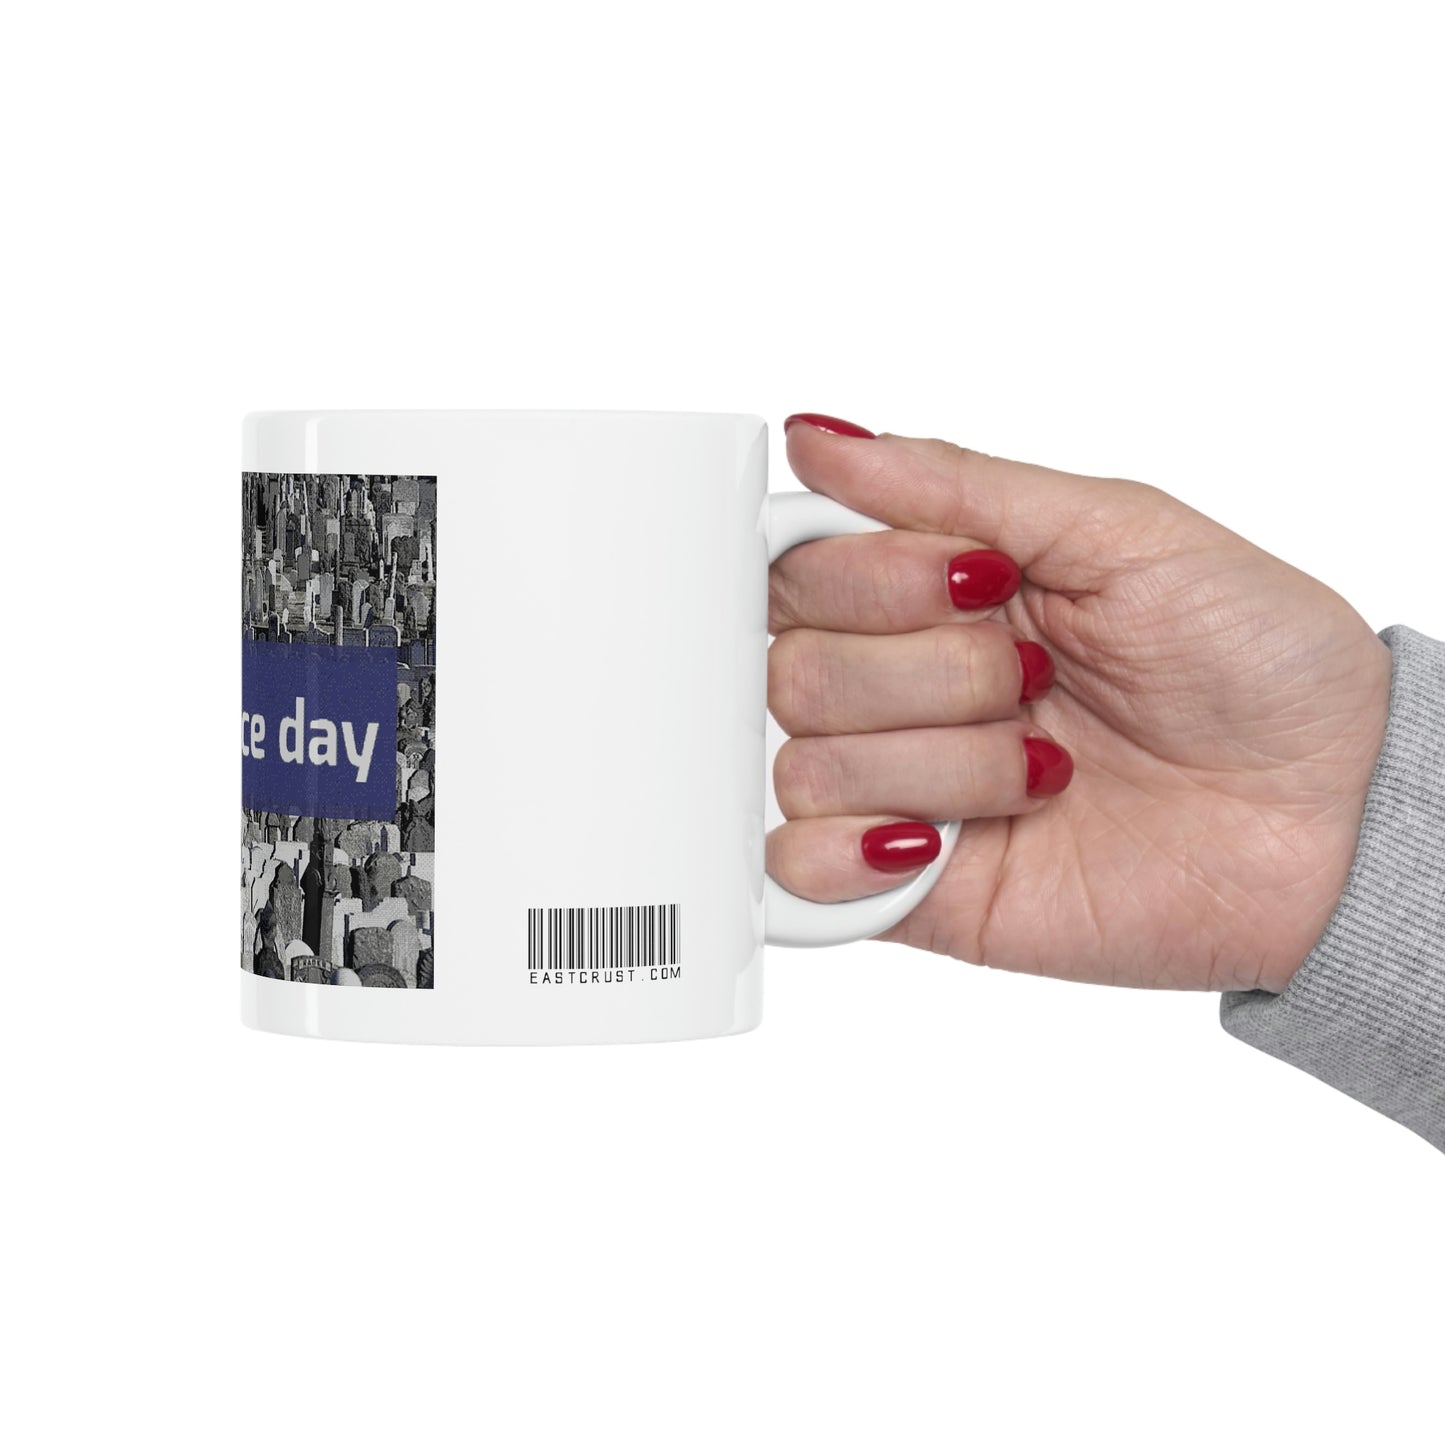 Have a nice day - Grave Book - Ceramic Mug 11oz